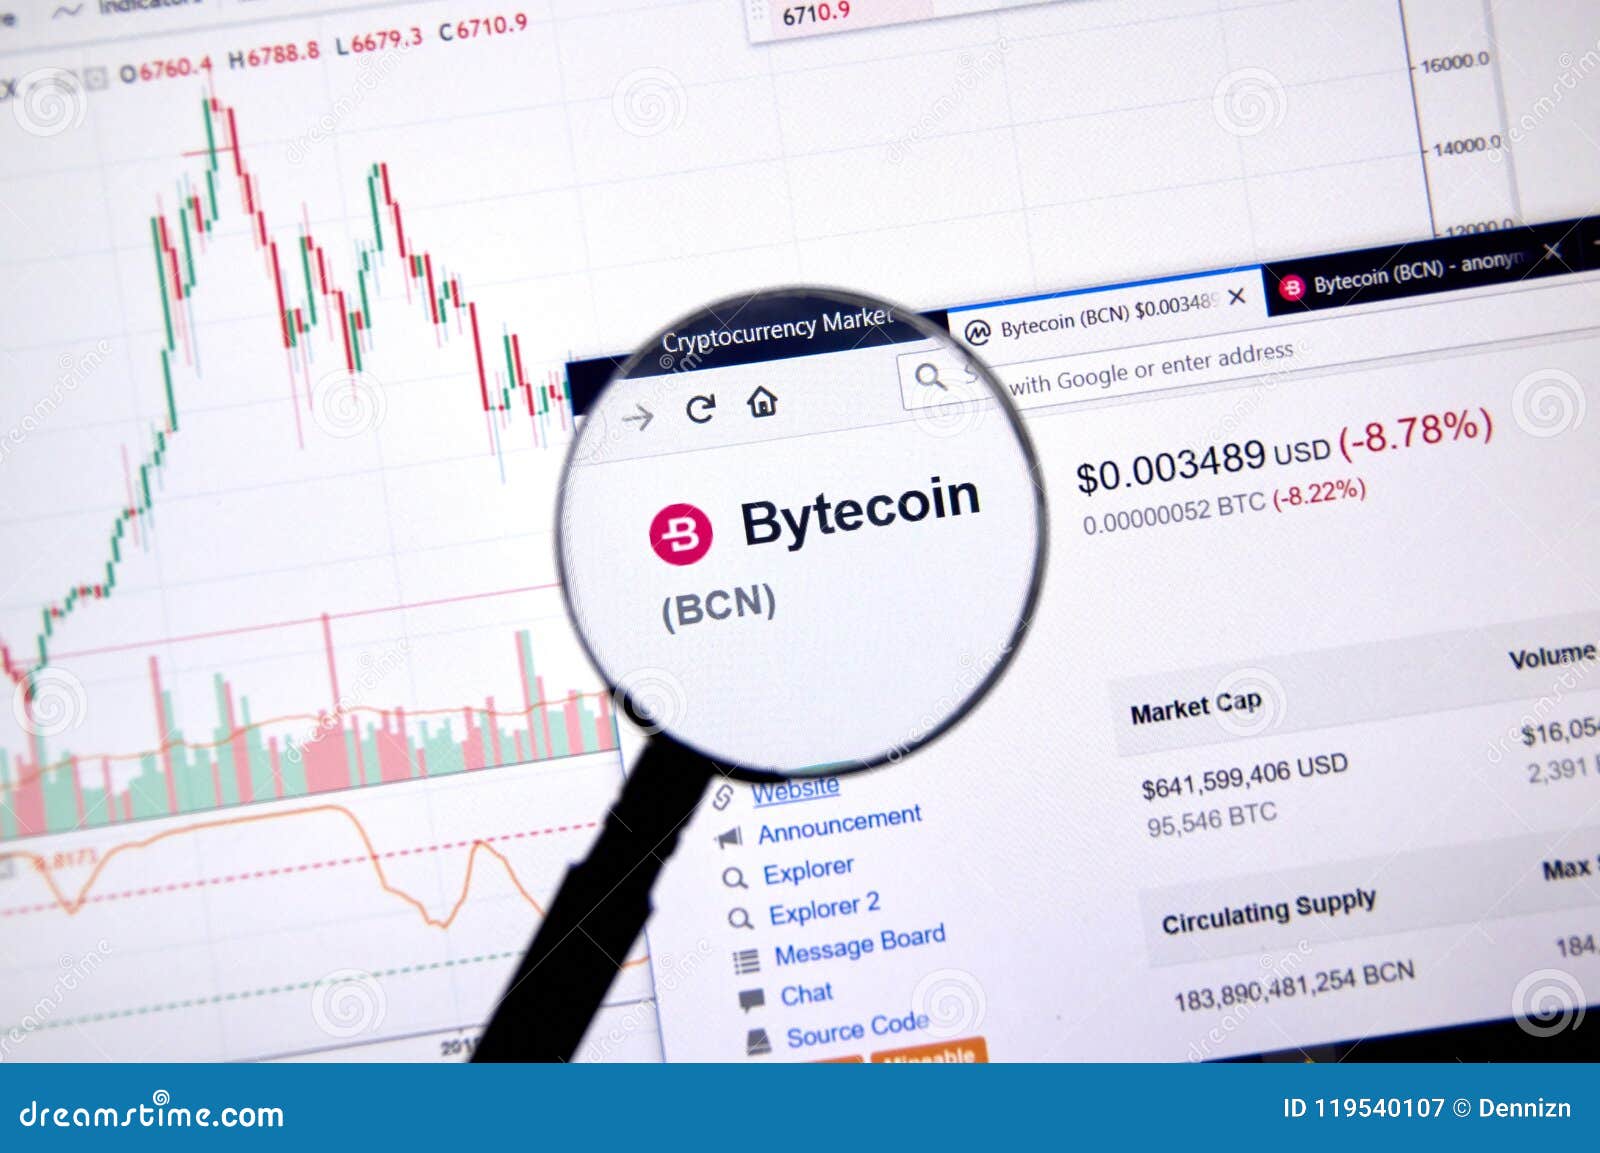 Bytecoin USD (BCN-USD) Price History & Historical Data - Yahoo Finance